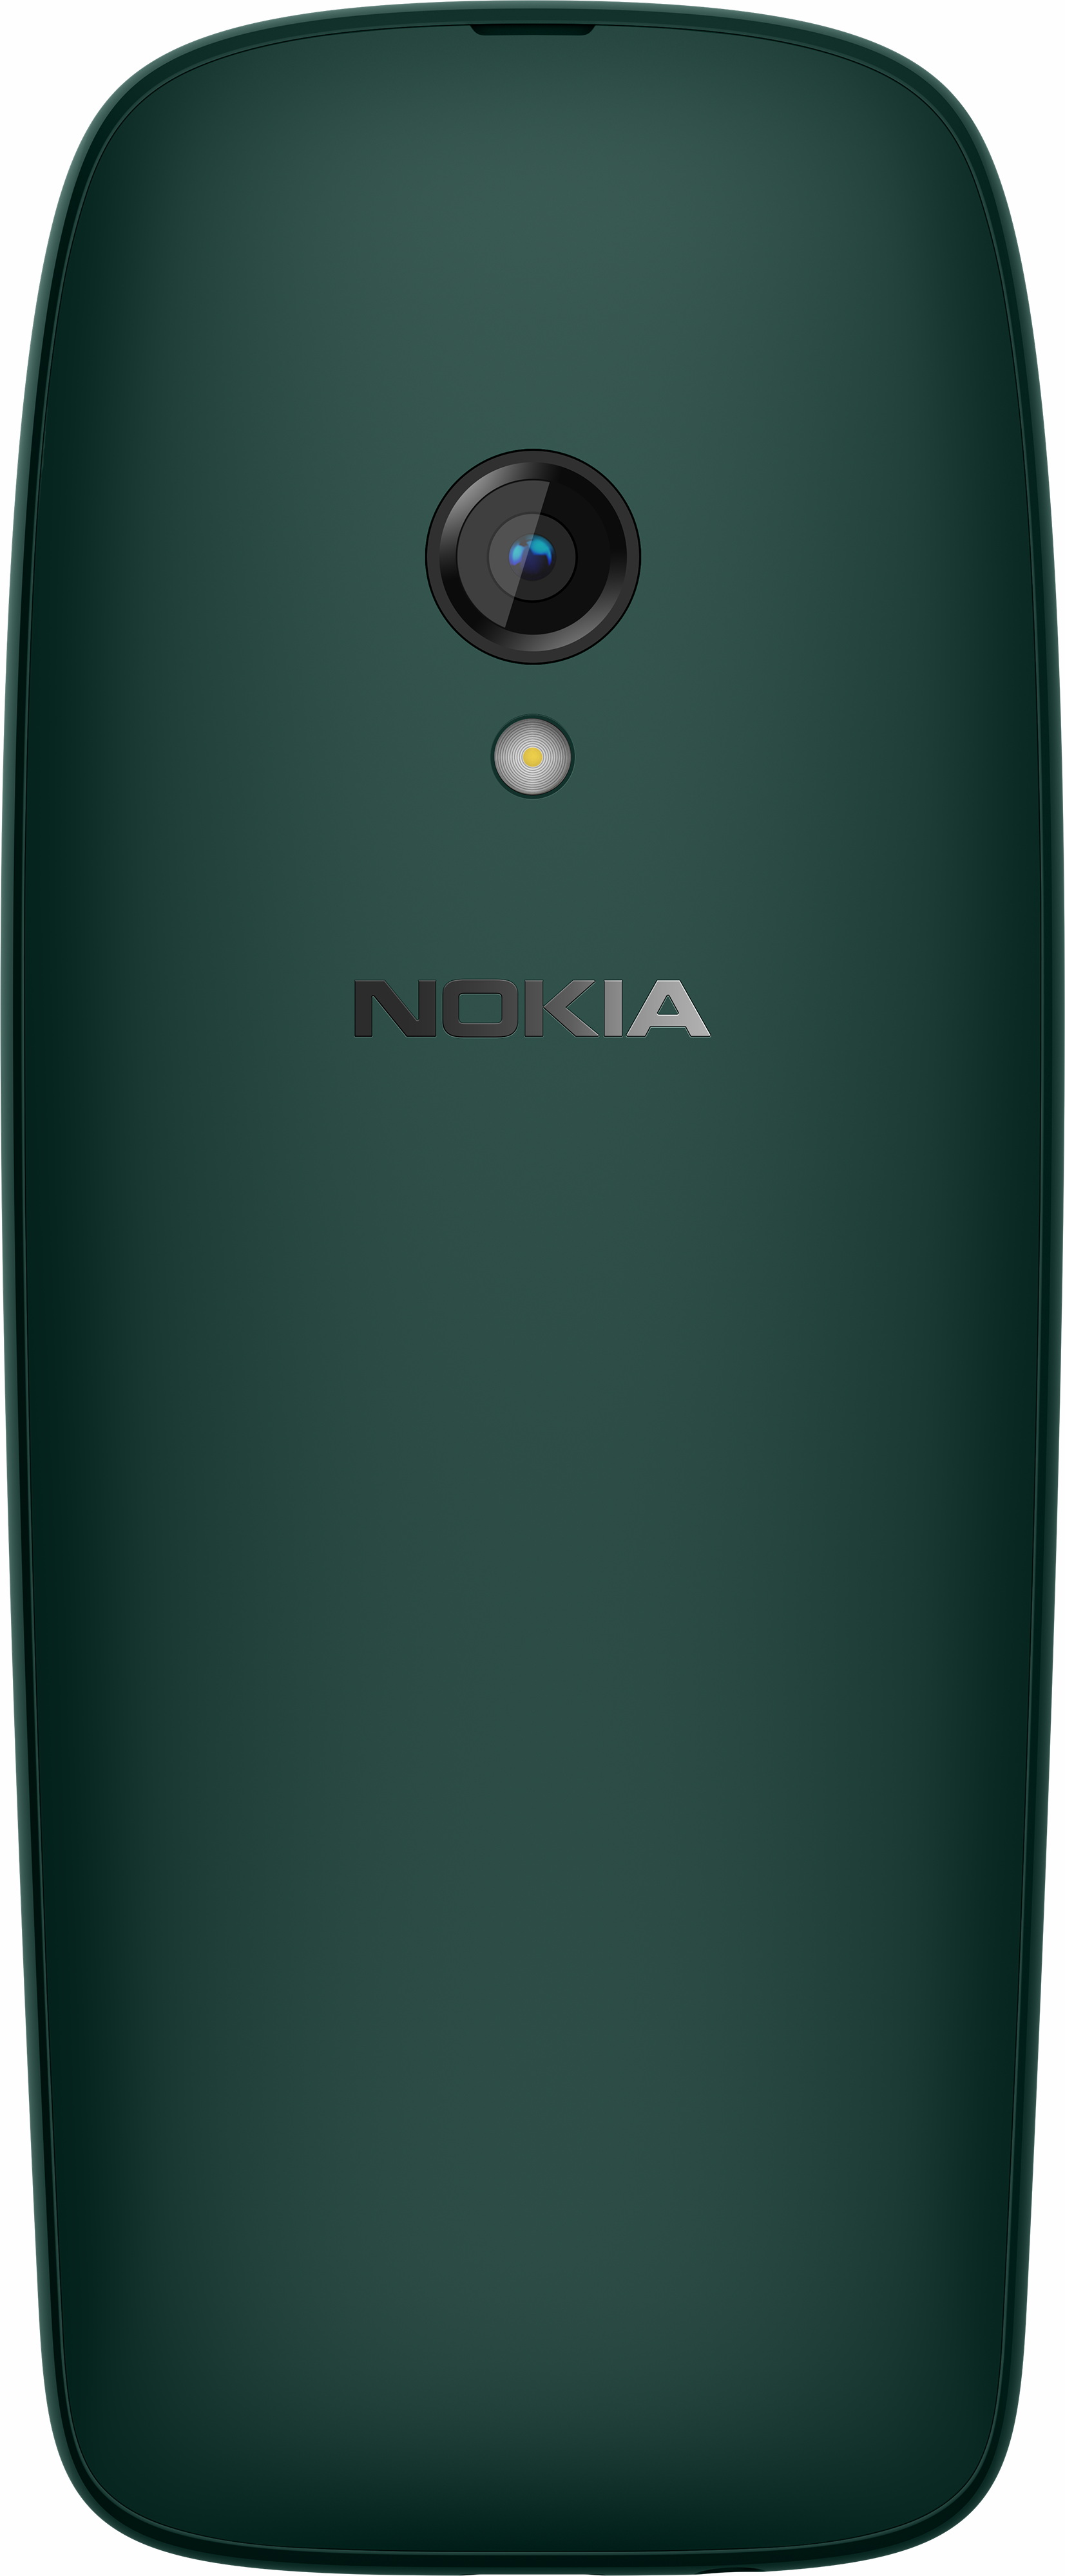  Анонс Nokia 6310 - очередное возрождение легенды Другие устройства  - anons_nokia_6310___esche_odno_vozrozhdenie_zabytoj_legendy_2